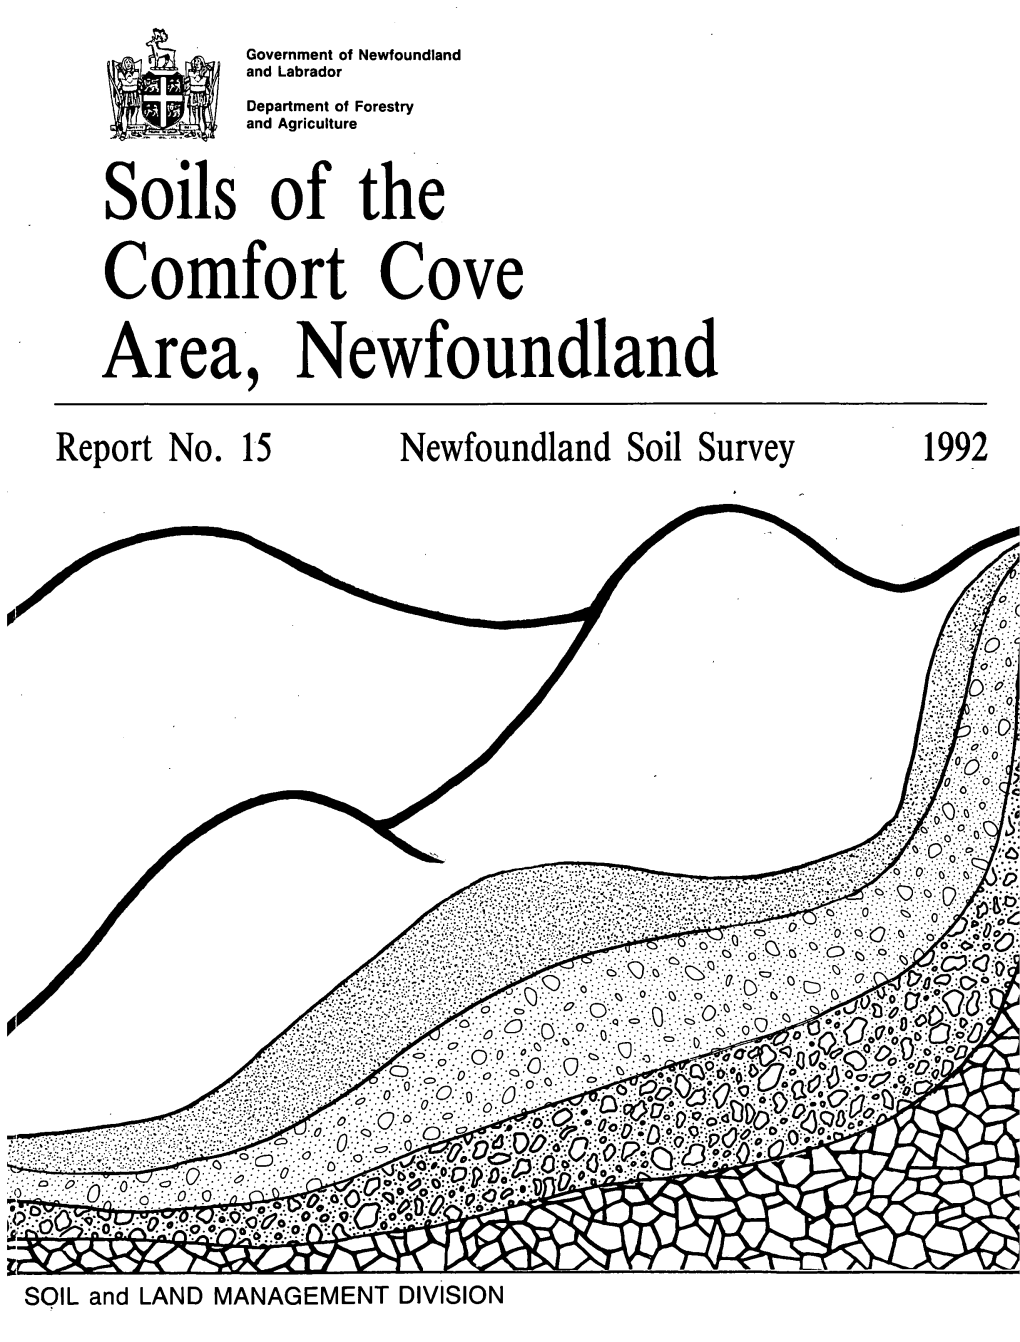 Soils of the Comfort Cove Area, Newfoundland